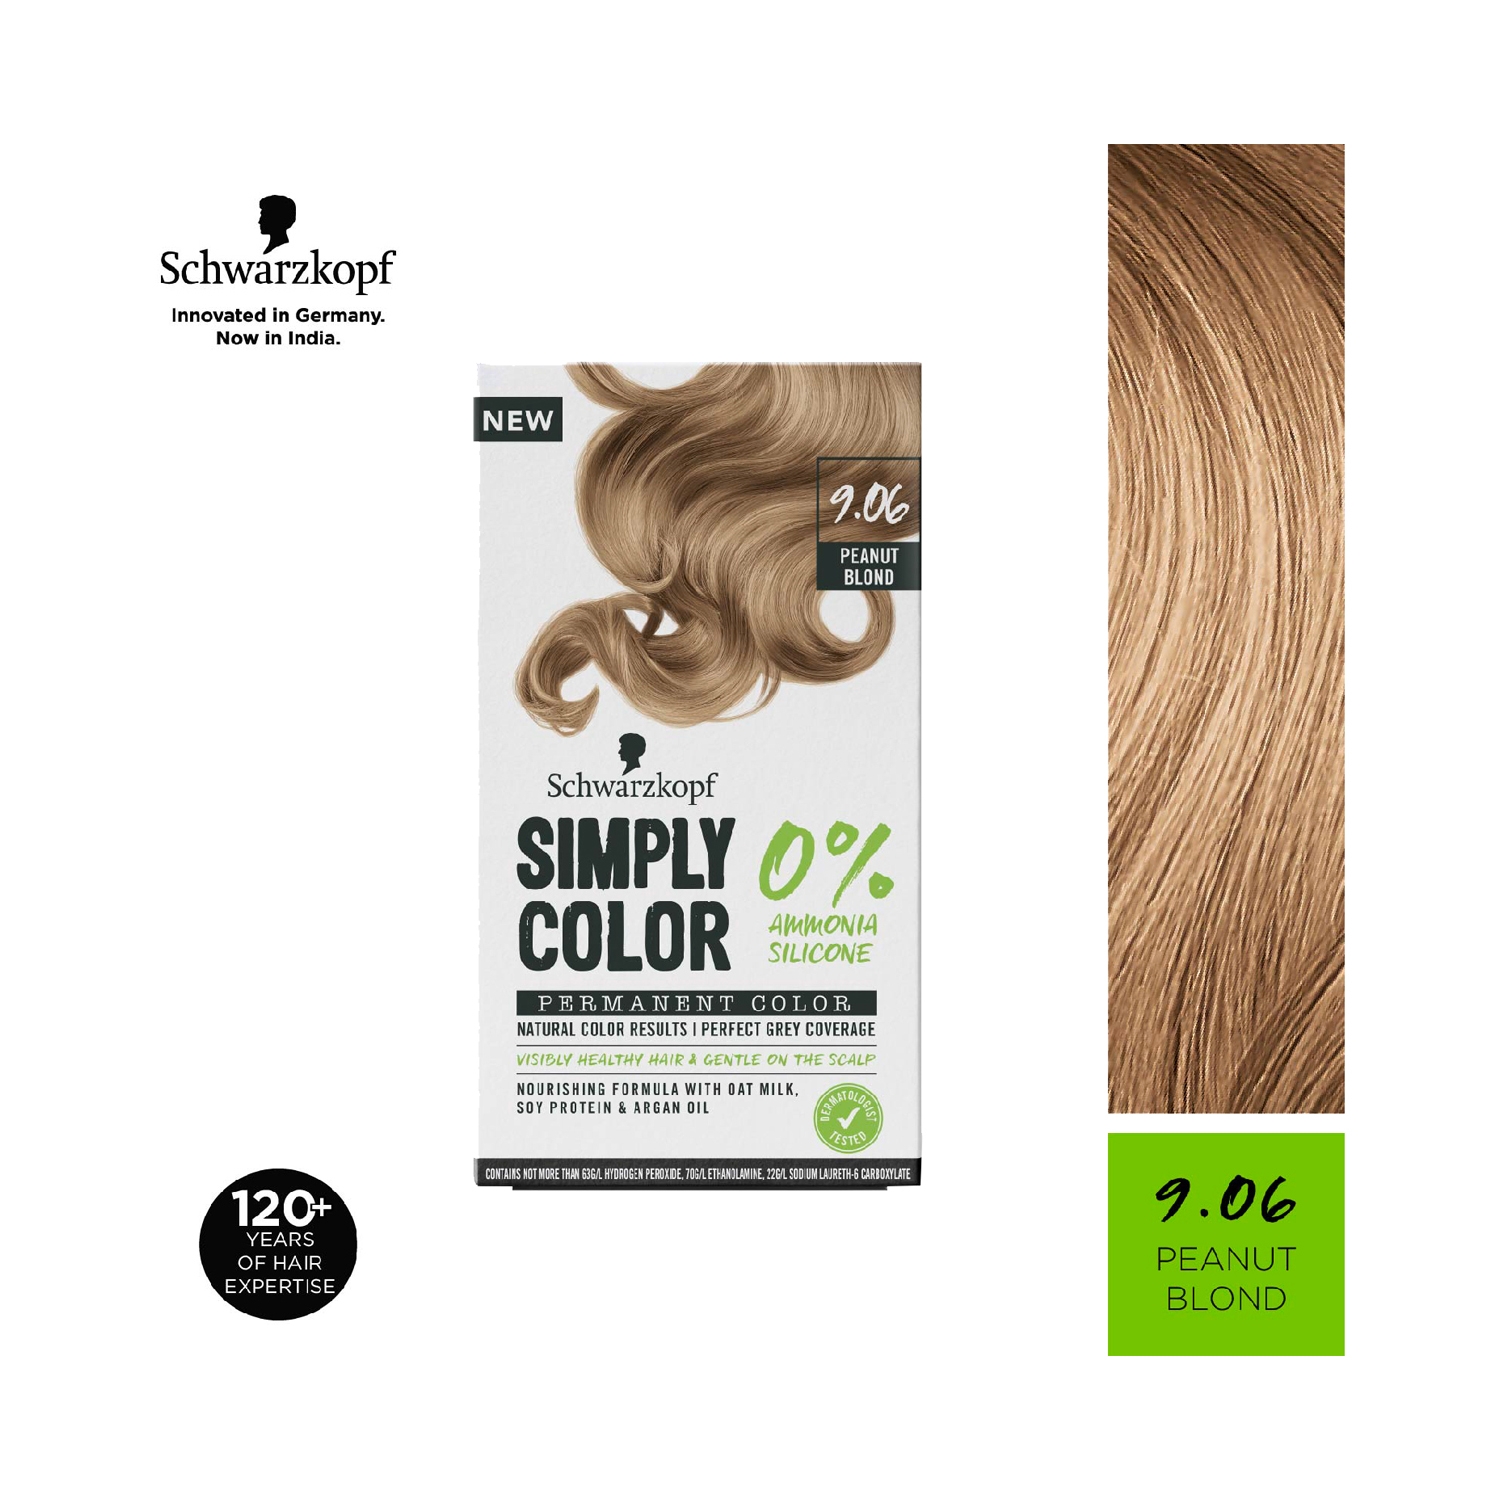 Schwarzkopf | Schwarzkopf Simply Color Permanent Hair Colour - 9.06 Peanut Blonde (142.5ml)